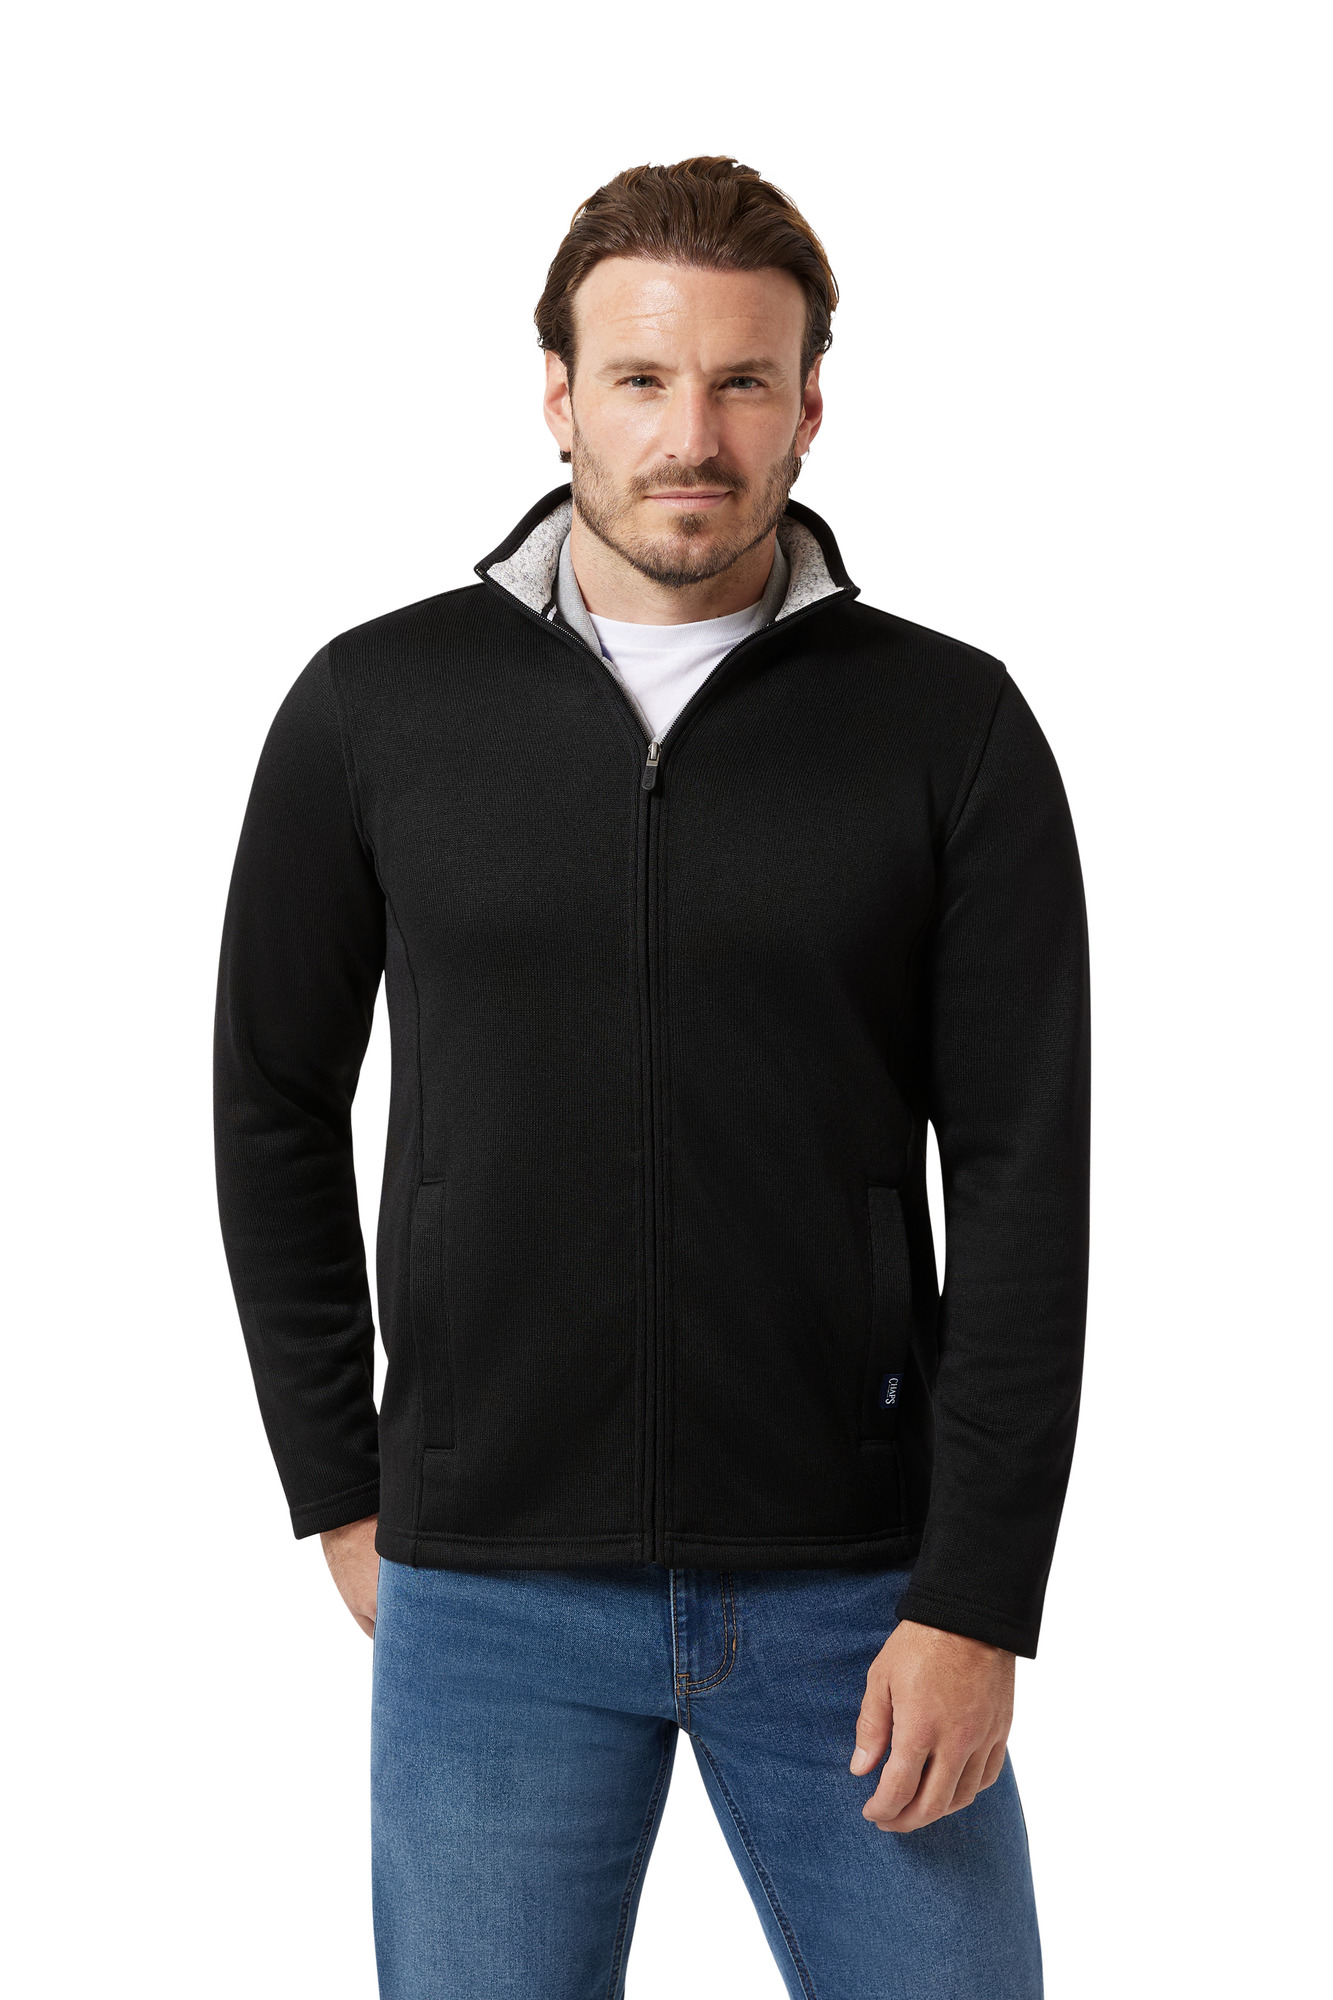 Chaps Men's & Big Men's Sherpa Lined Fleece Snap Front Sweater Jacket - image 1 of 5